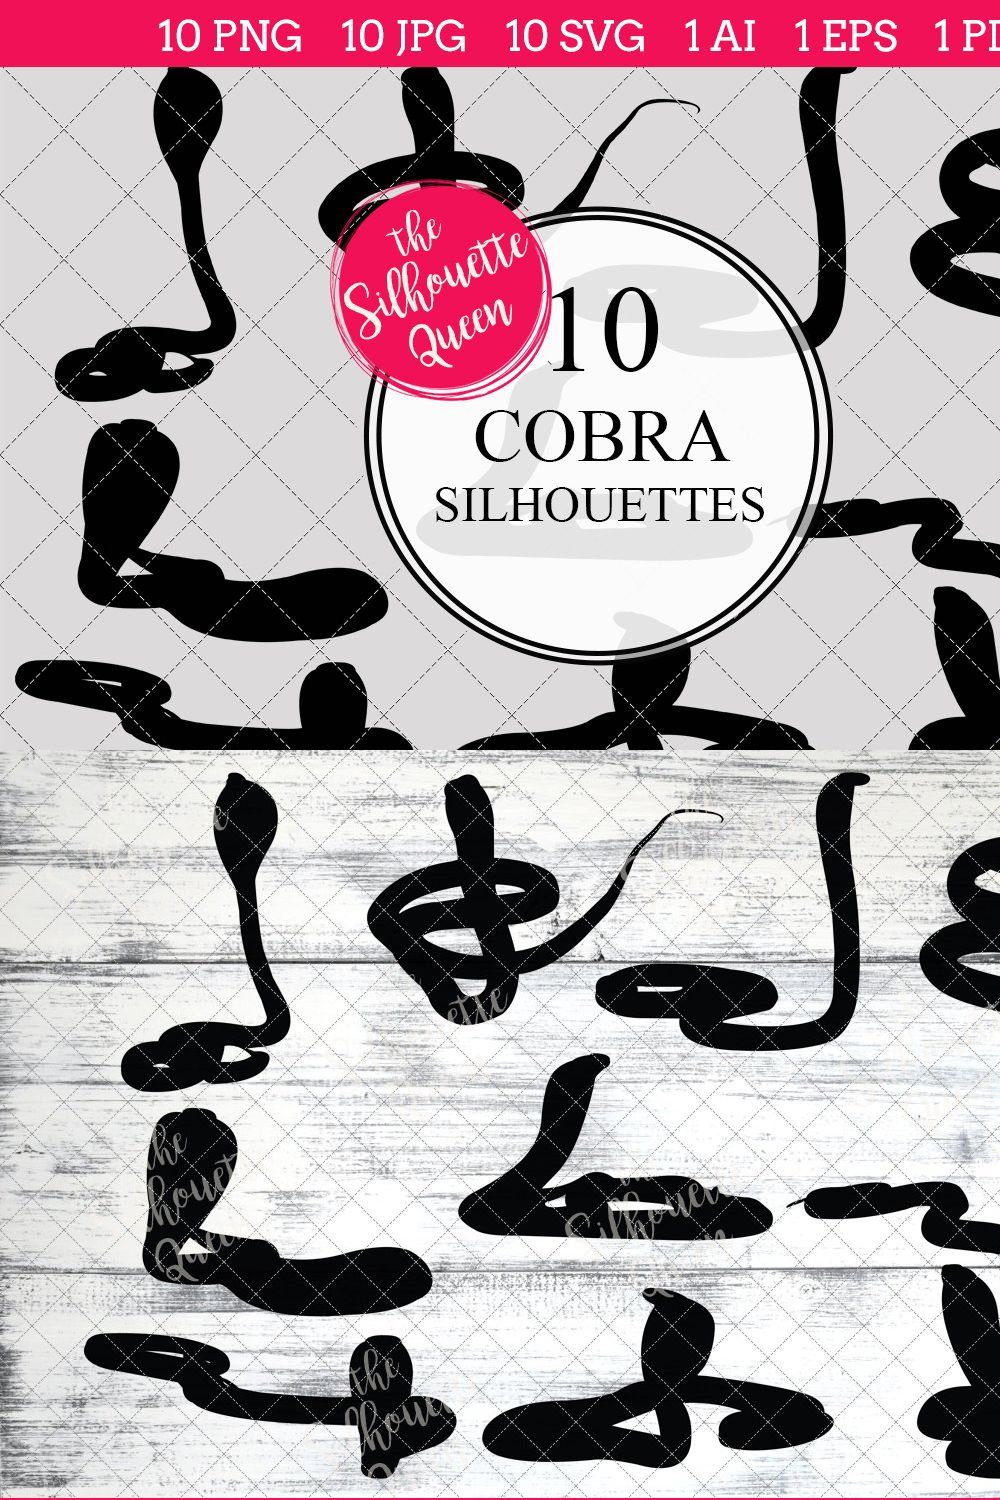 Cobra Snake Silhouette Clipart pinterest preview image.